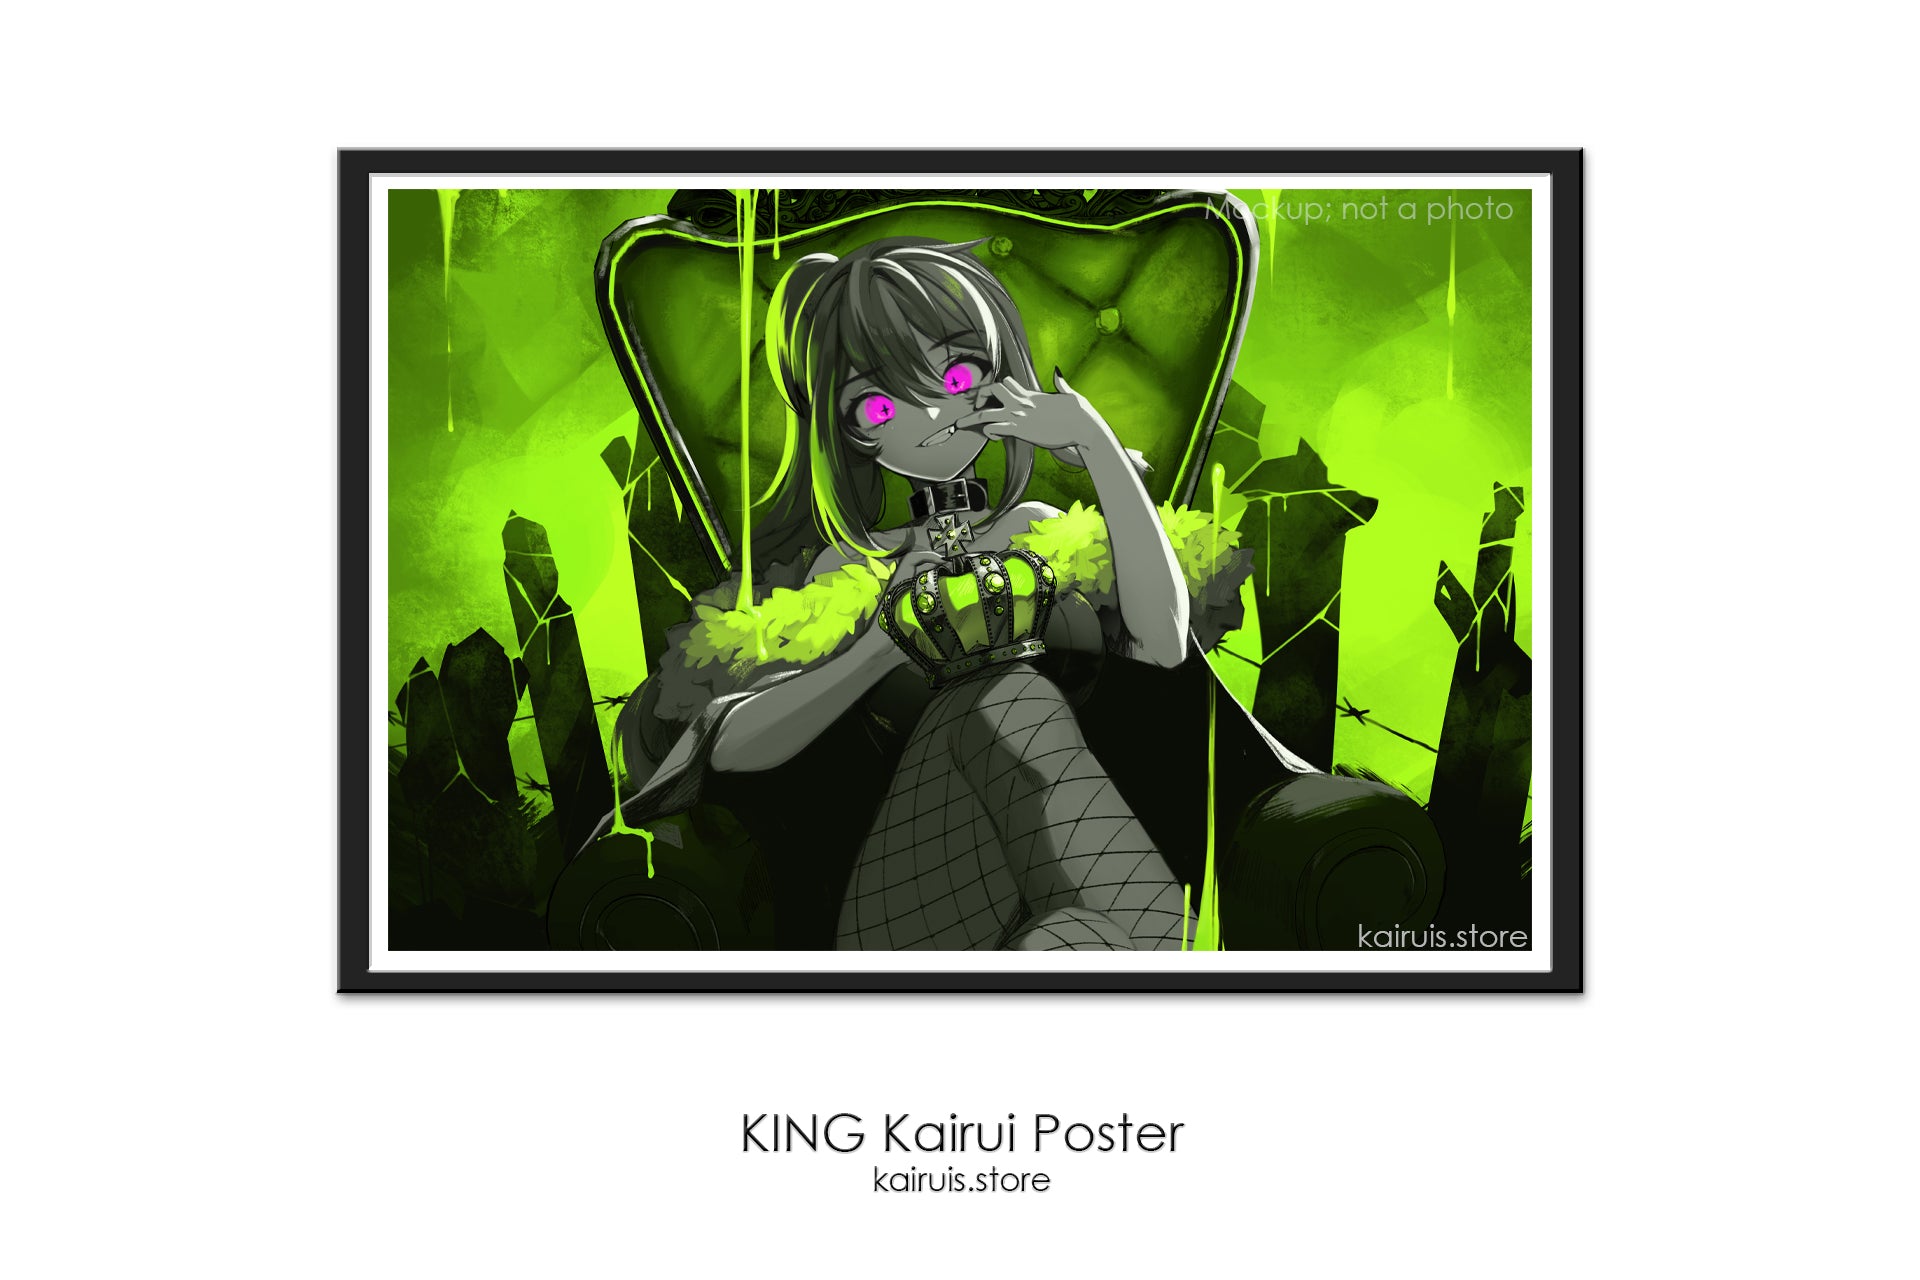 KING Kairui Poster [Original]